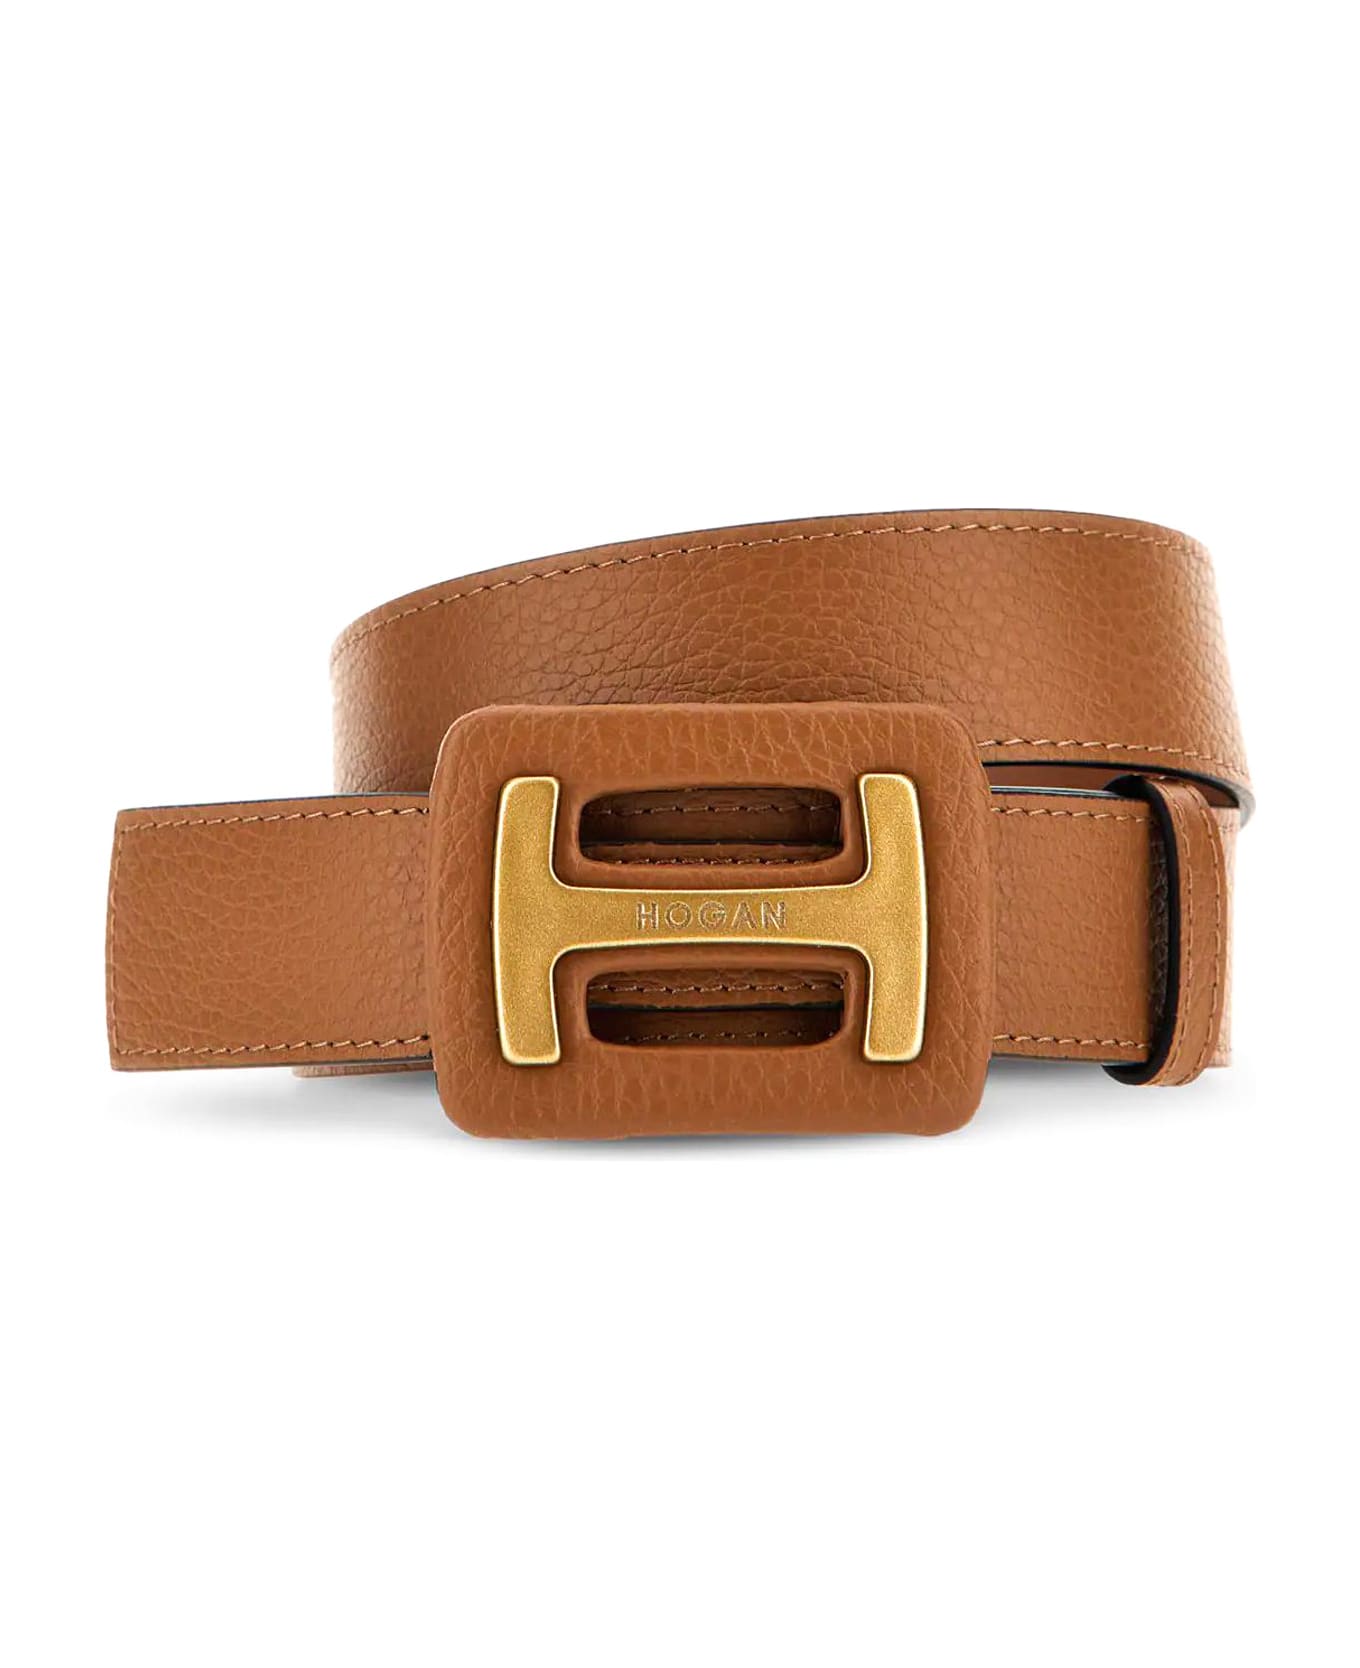 Hogan Leather Belt - Brown